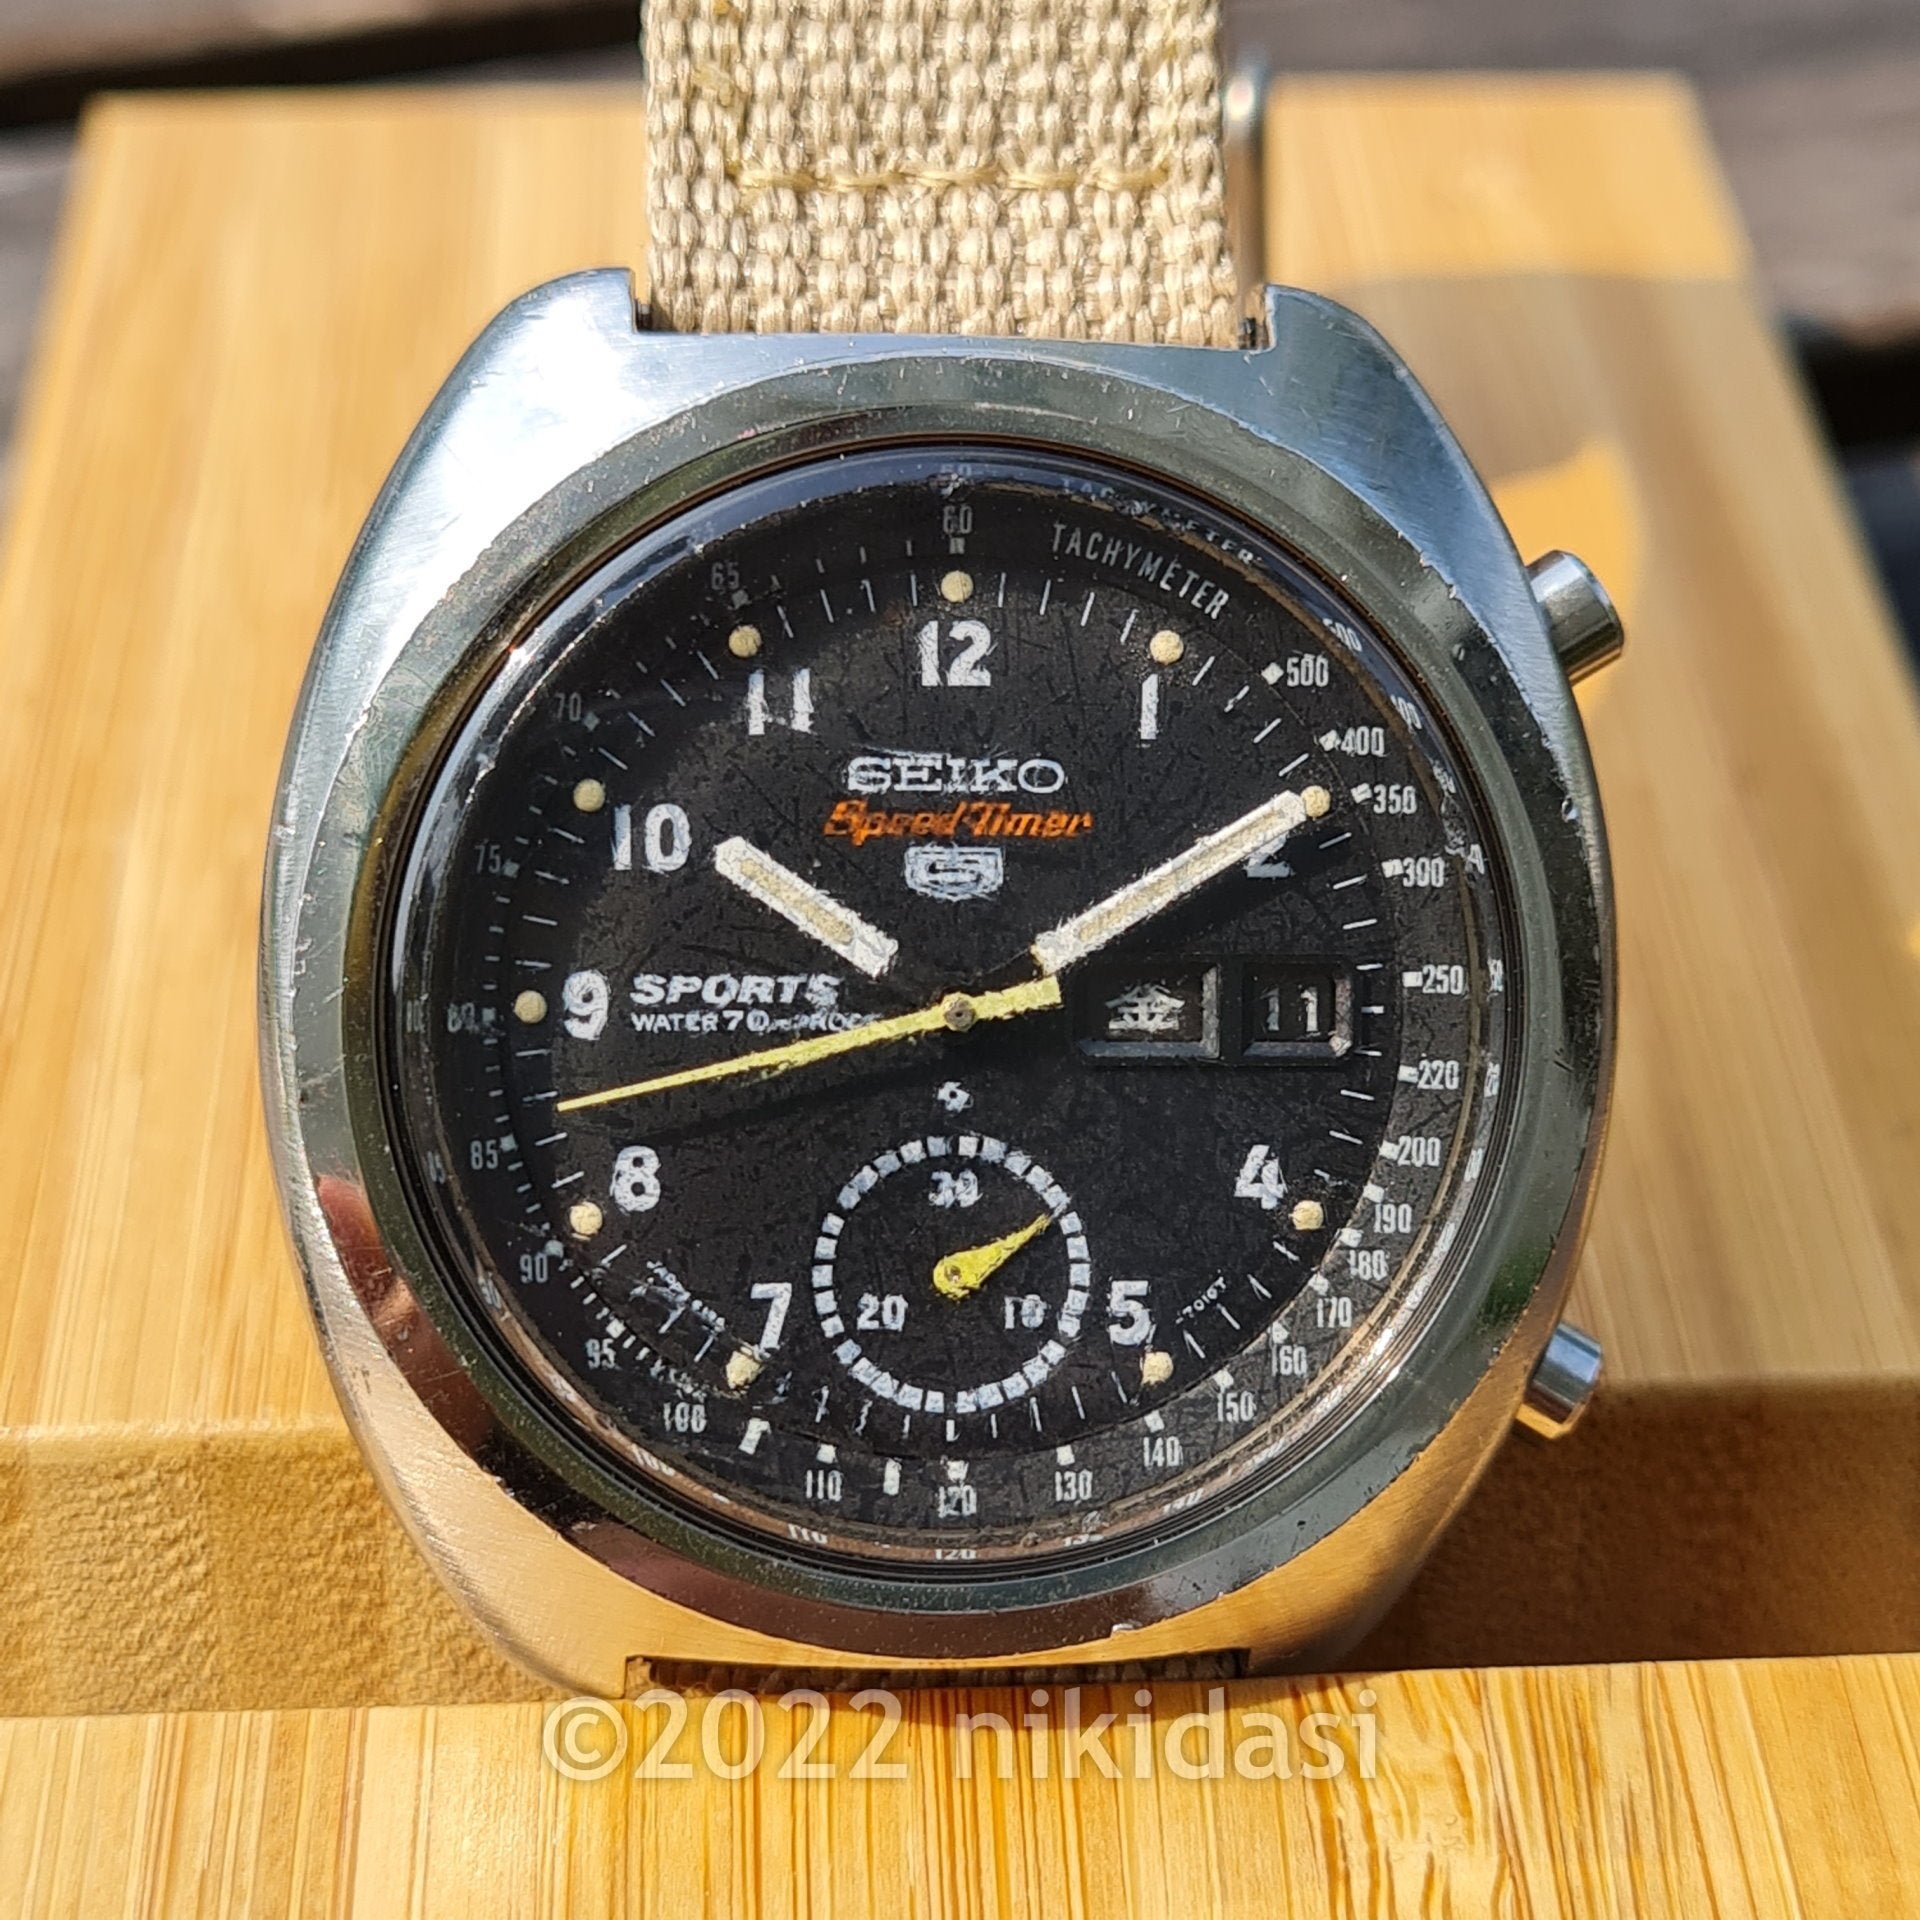 Seiko 6139-7011 Military Speed-Timer (November 1970) | The Watch Site